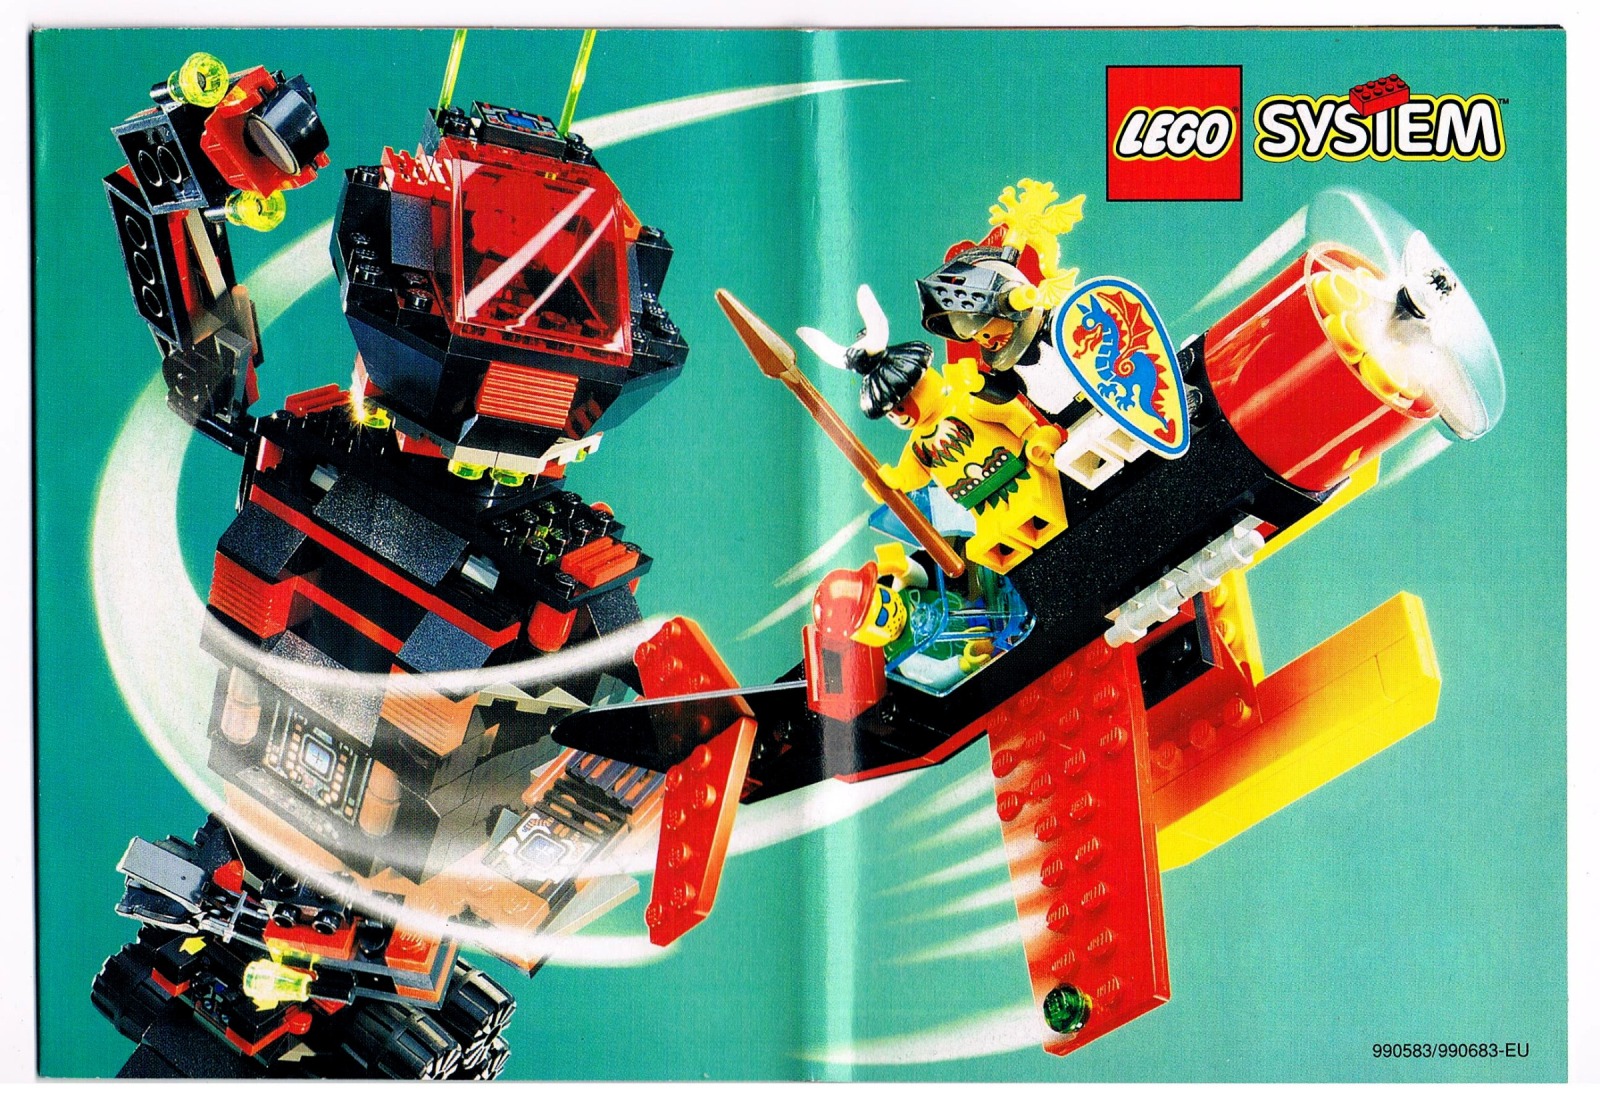 Lego System catalog 1994